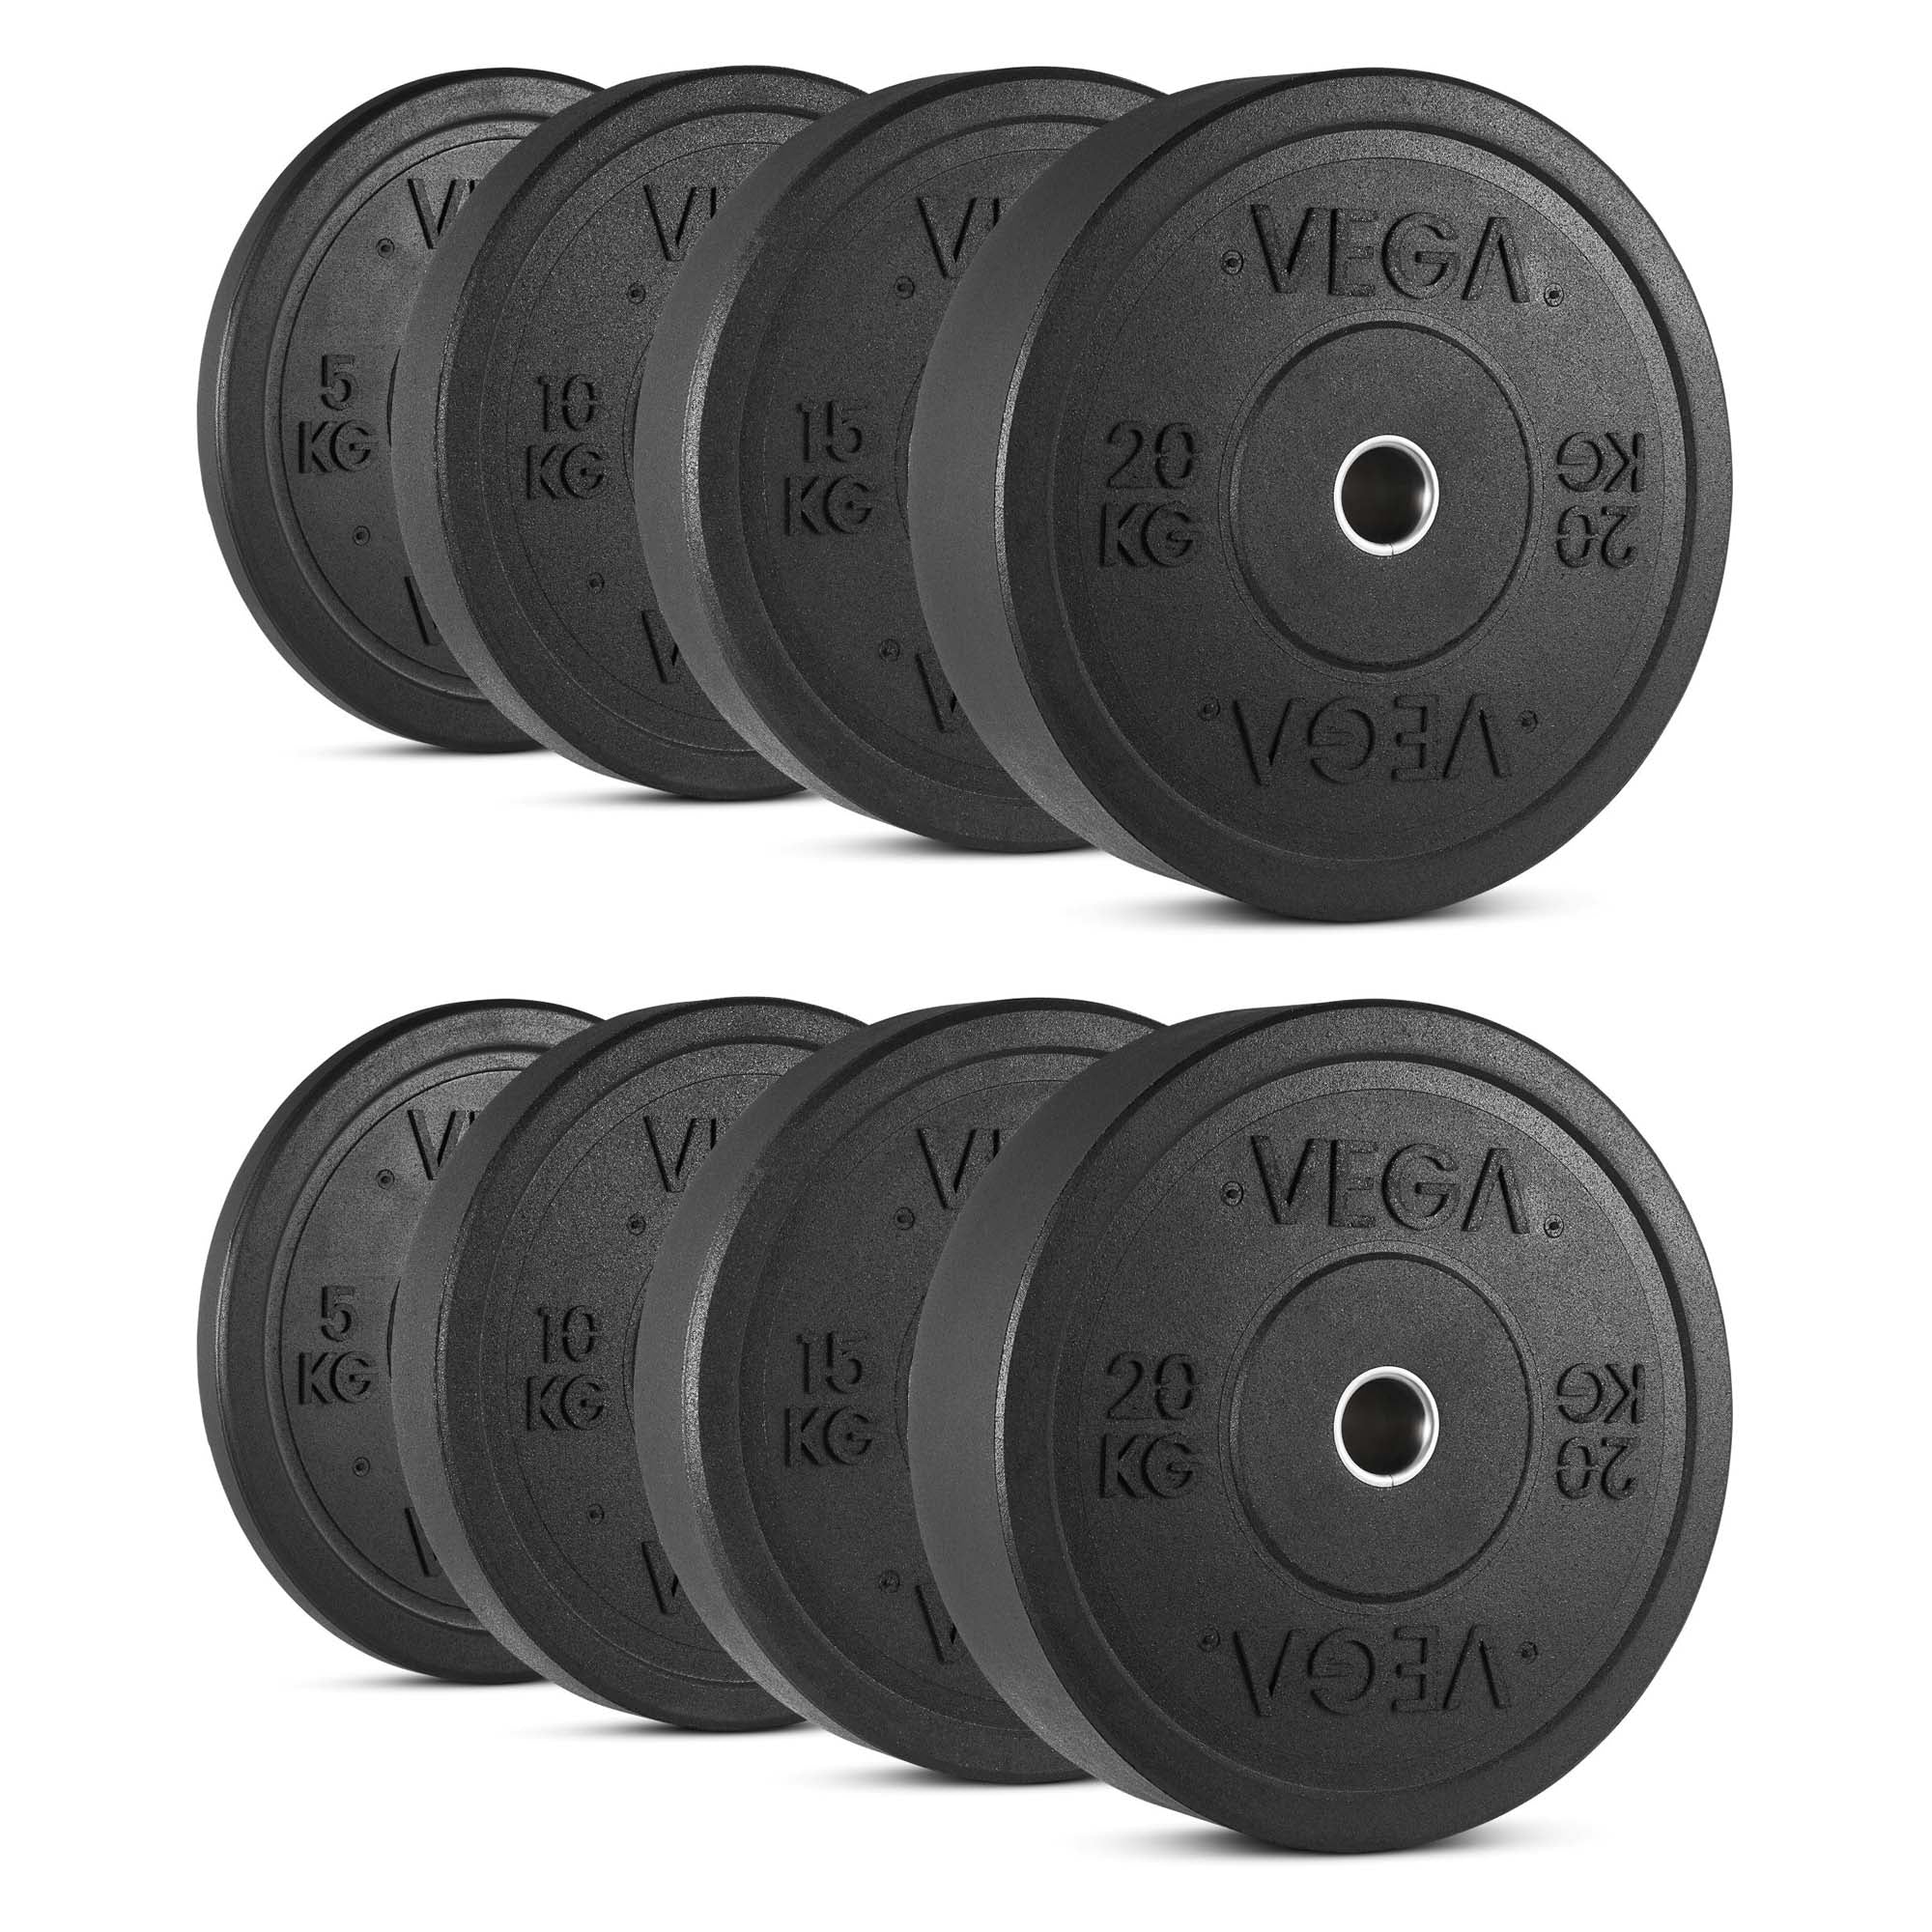 Vega 100kg Rubber Crumb Bumper Olympic Weight Plates Set